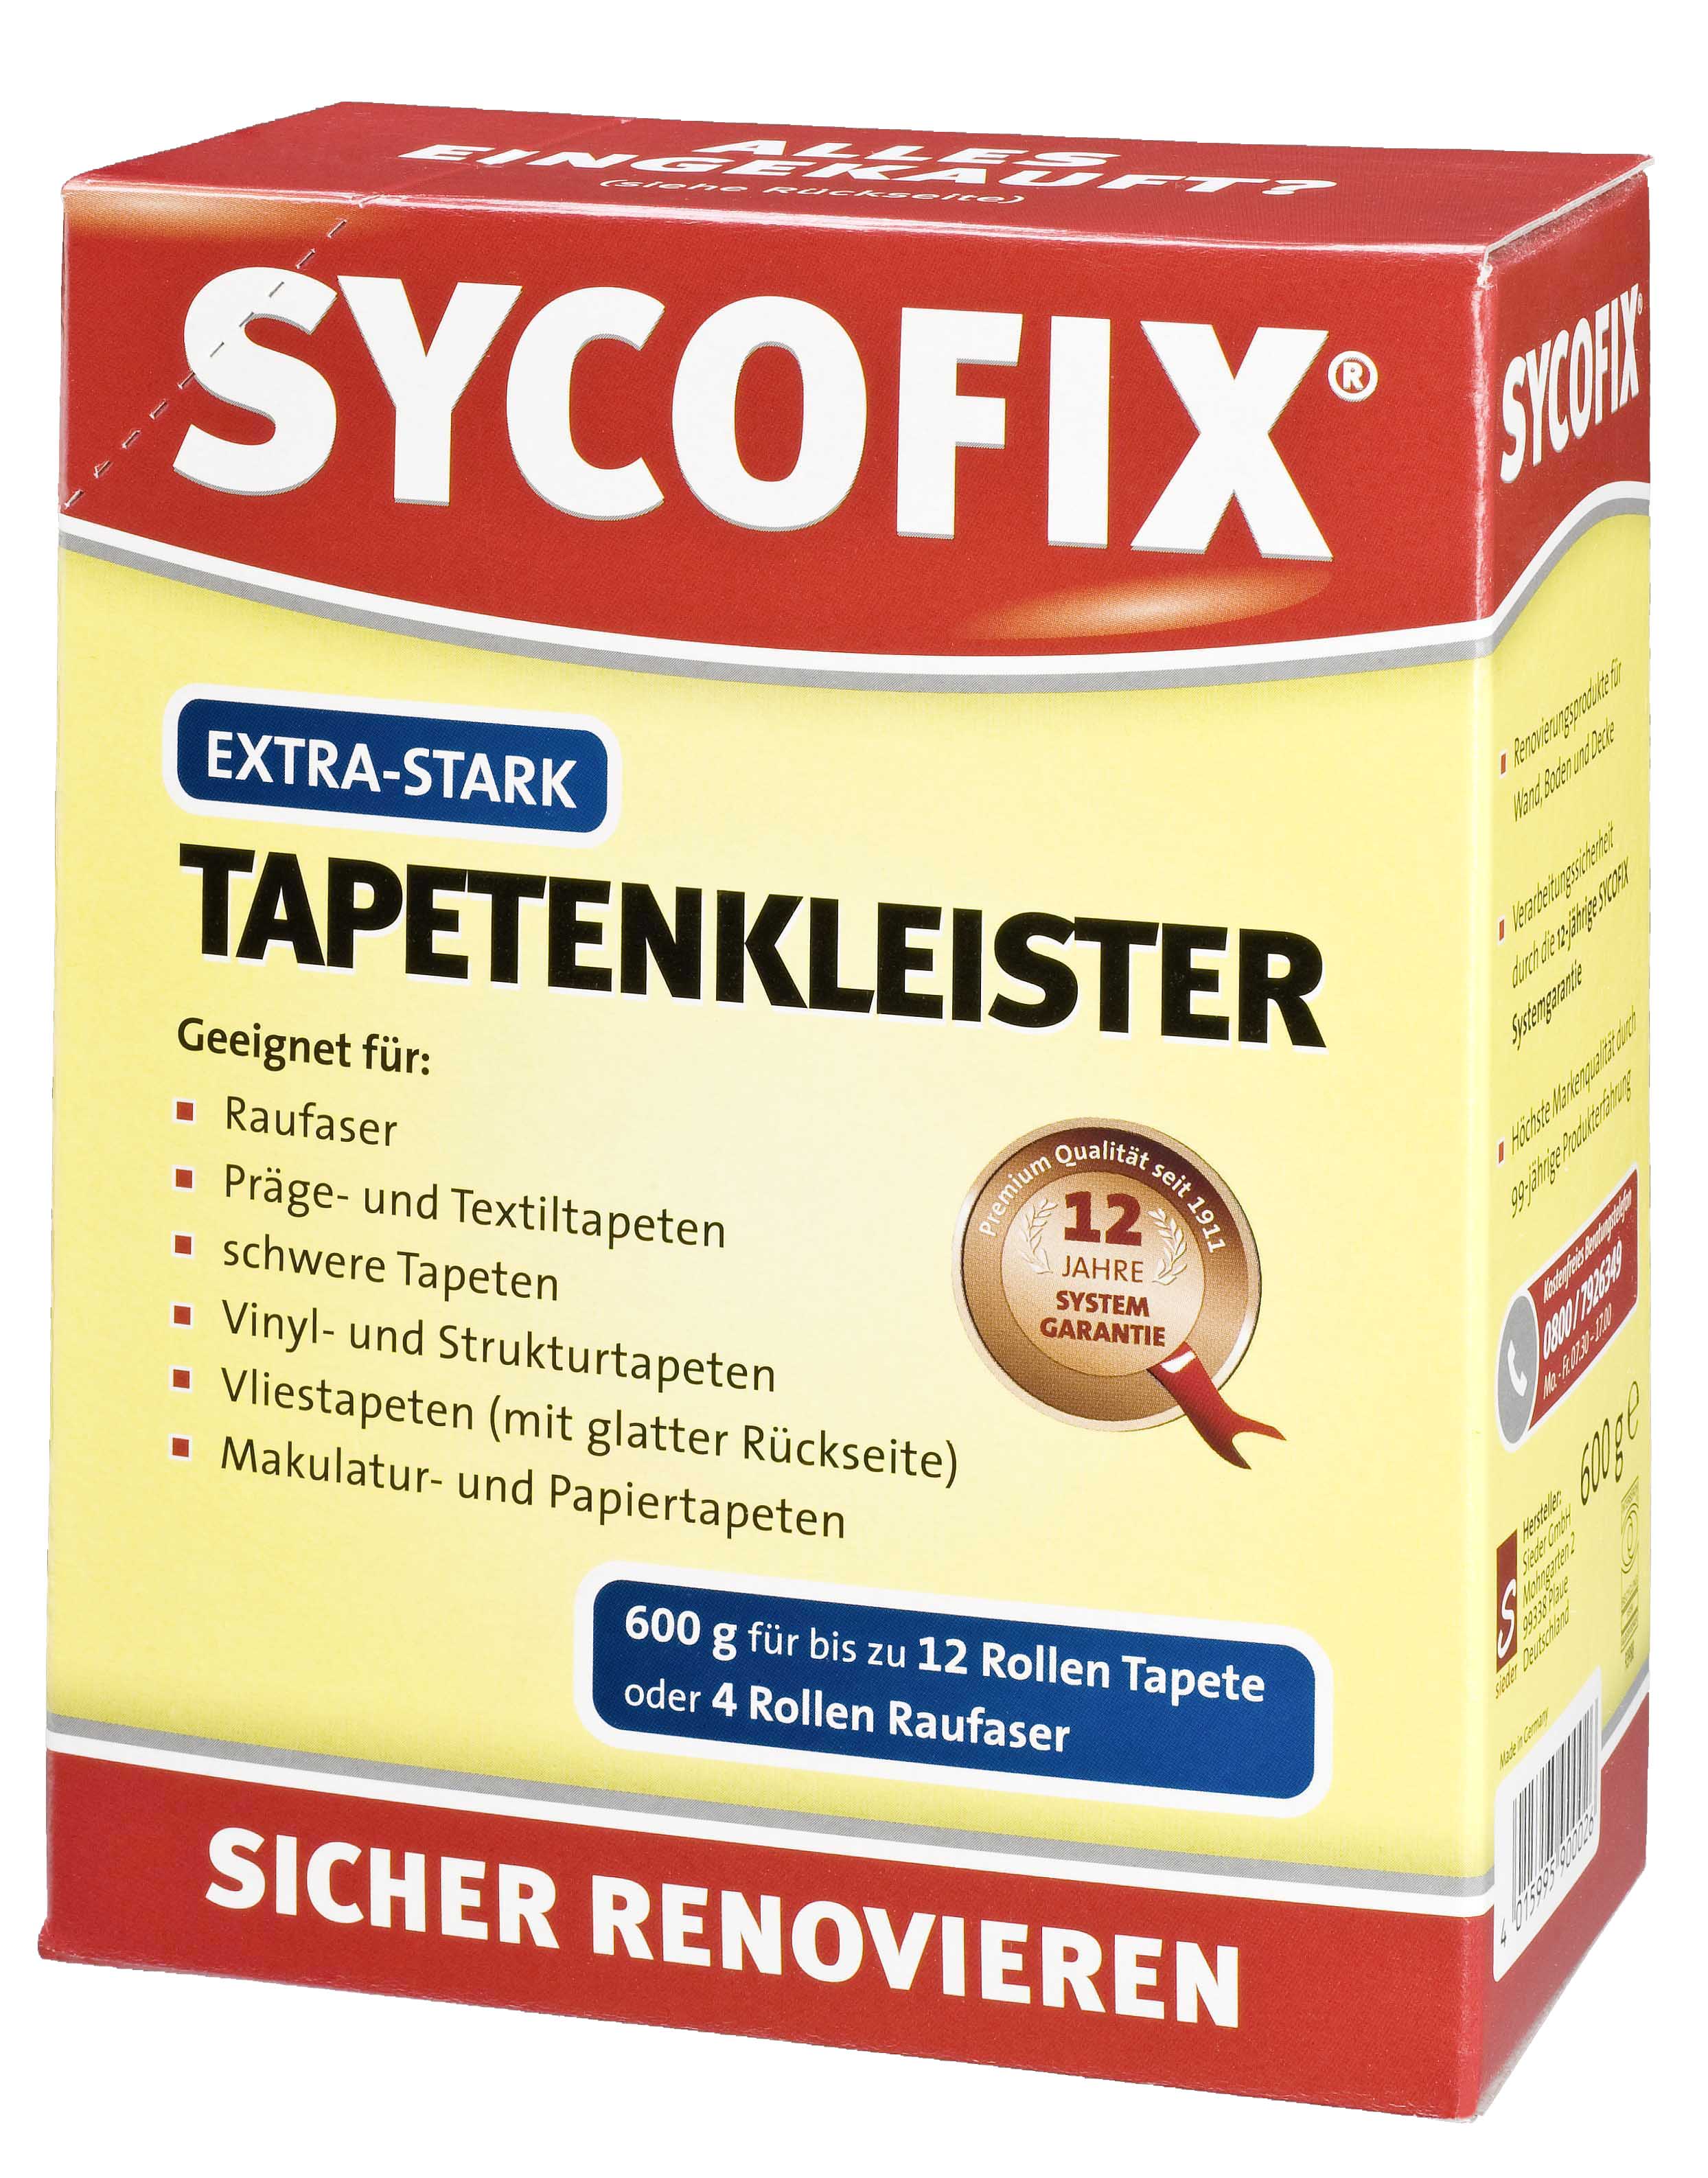 SYCOFIX® Tapetenkleister extra-stark 600g Schachtel